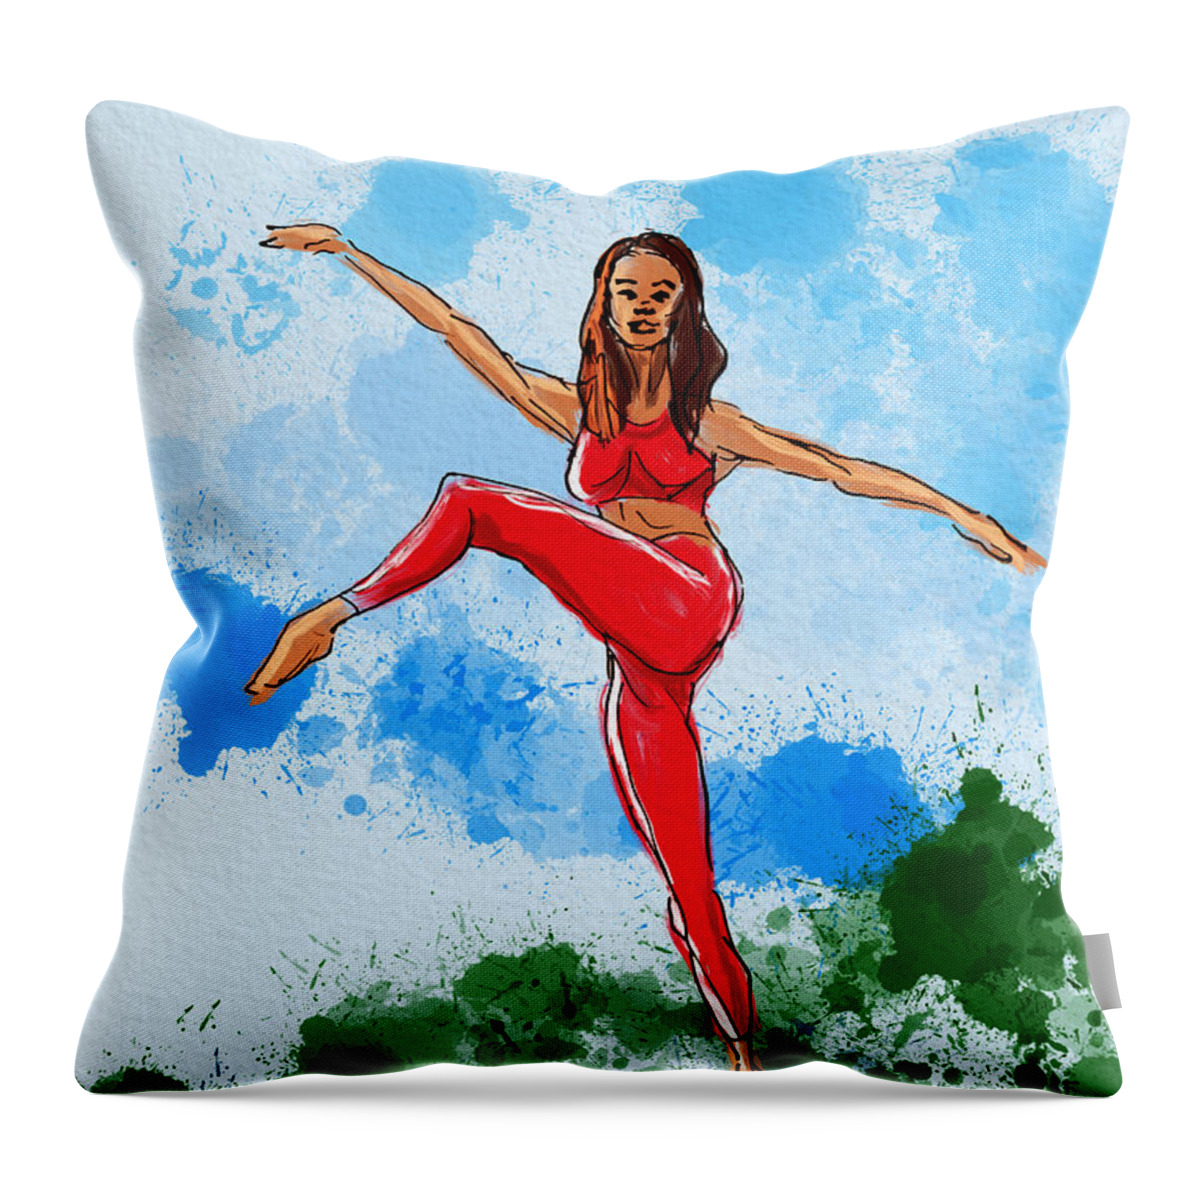 Dancer Throw Pillow featuring the digital art Dancer In Red by Michael Kallstrom